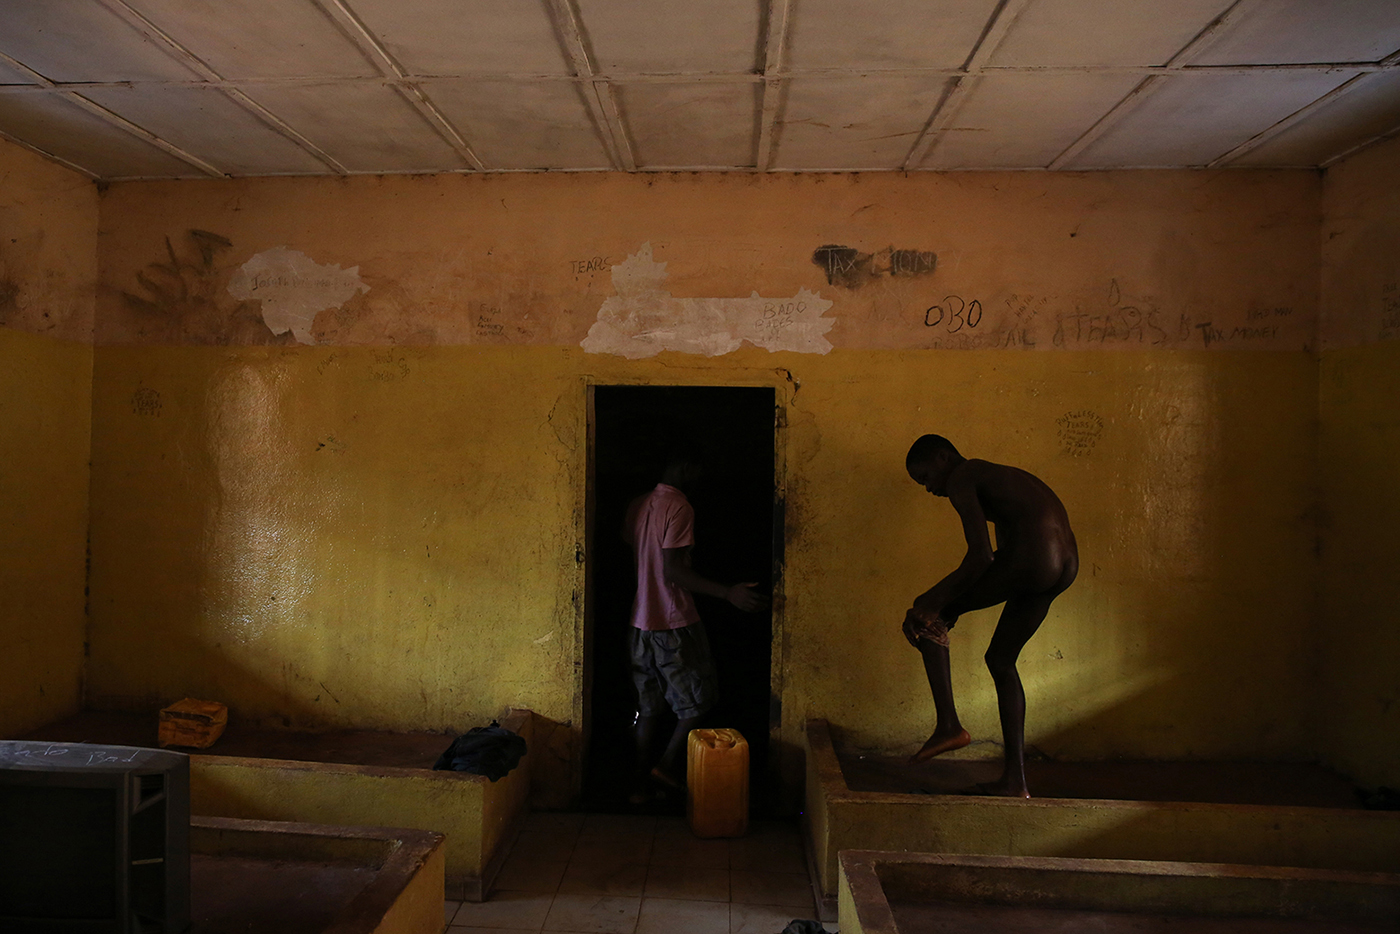 AWAITING TRIAL / INSIDE JUVENILE PRISONS IN SIERRA LEONE